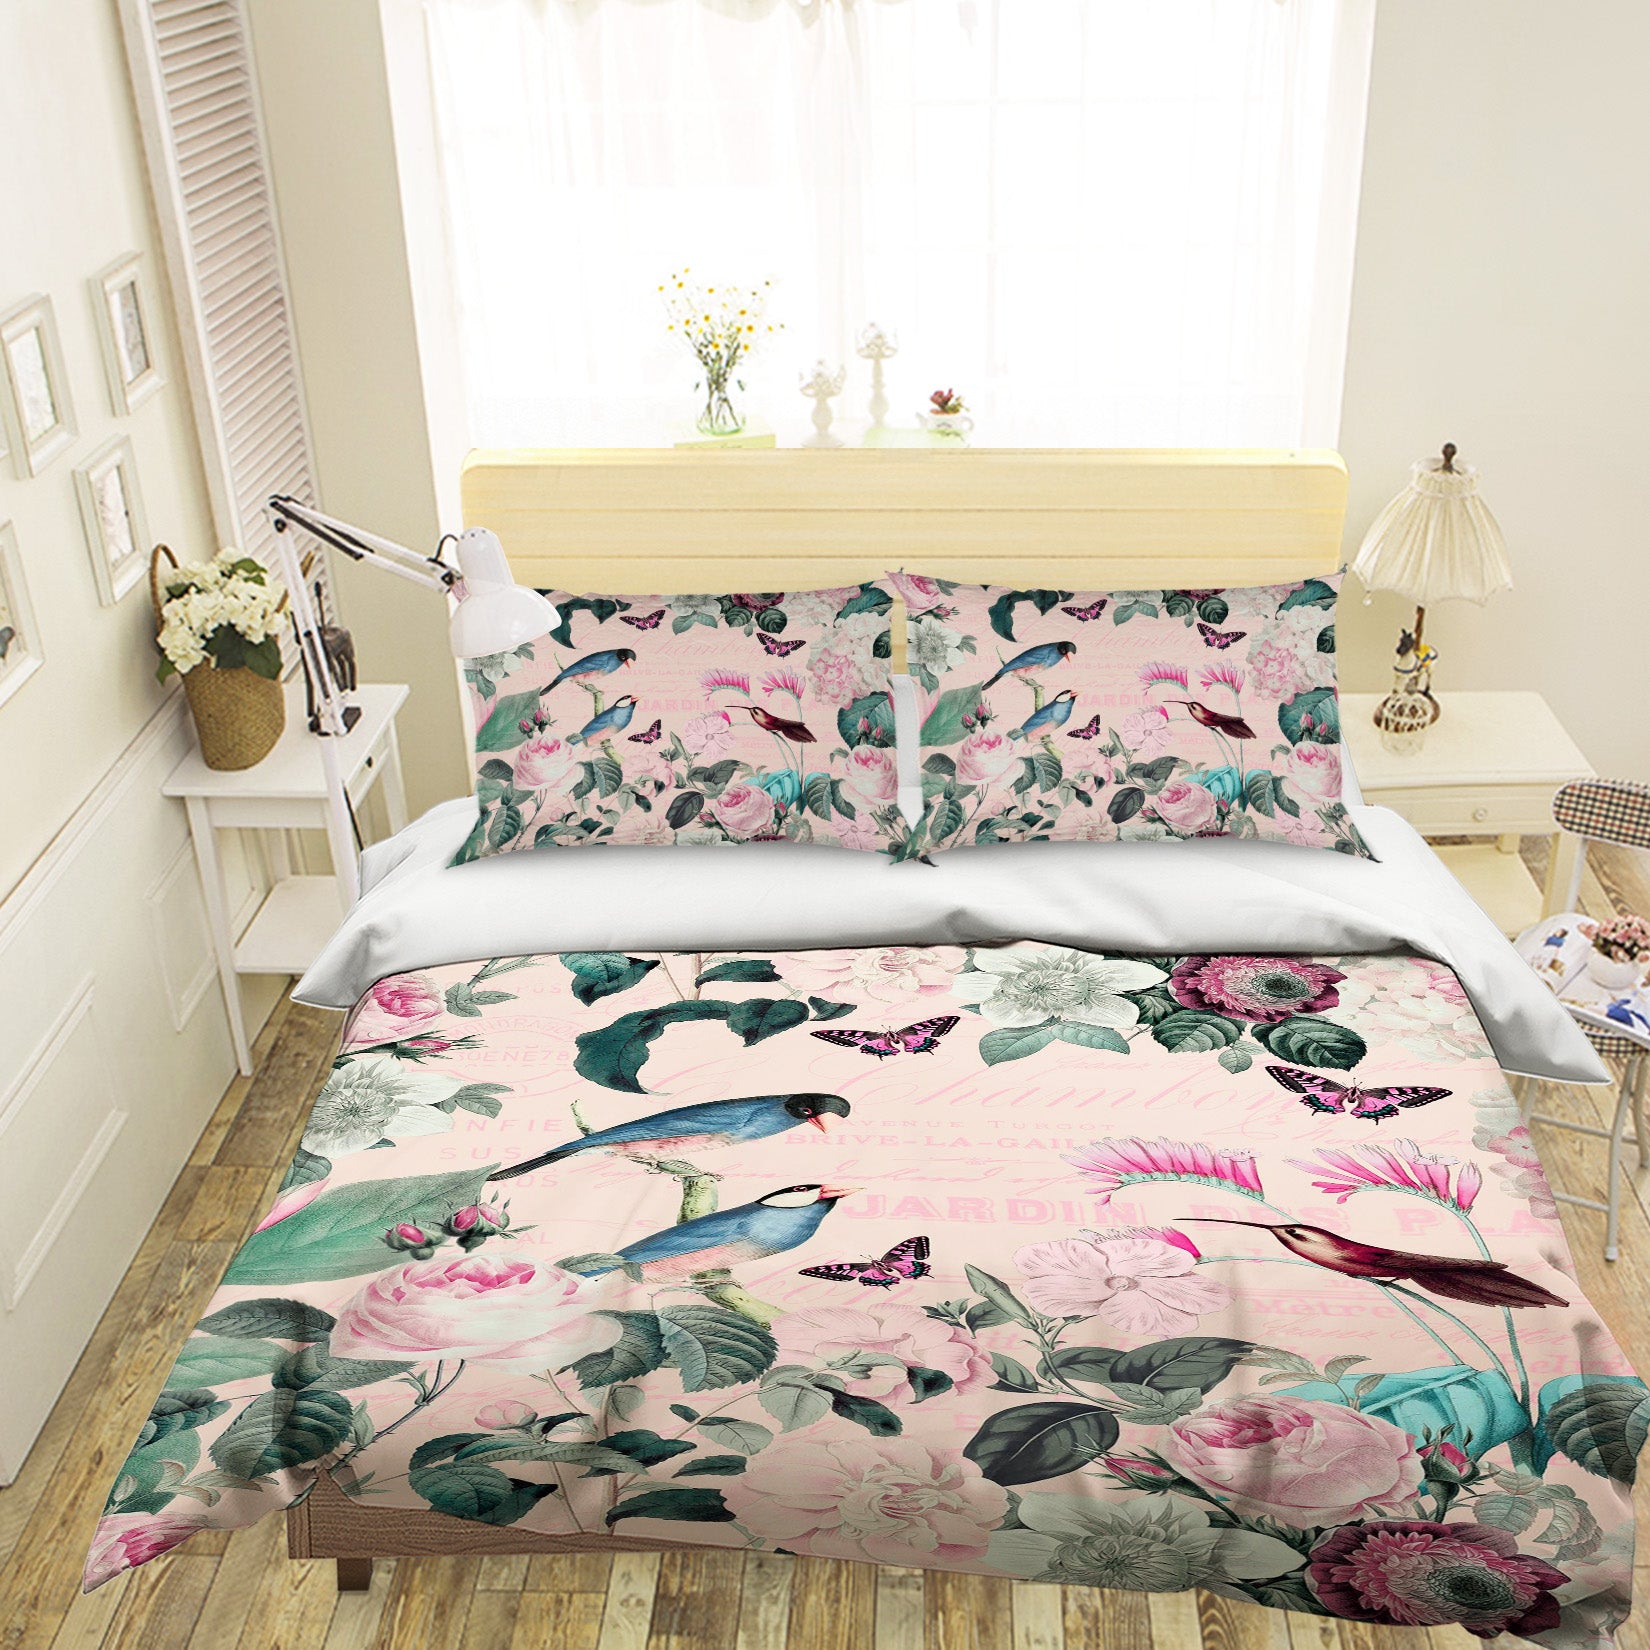 3D Flower Bird 119 Andrea haase Bedding Bed Pillowcases Quilt